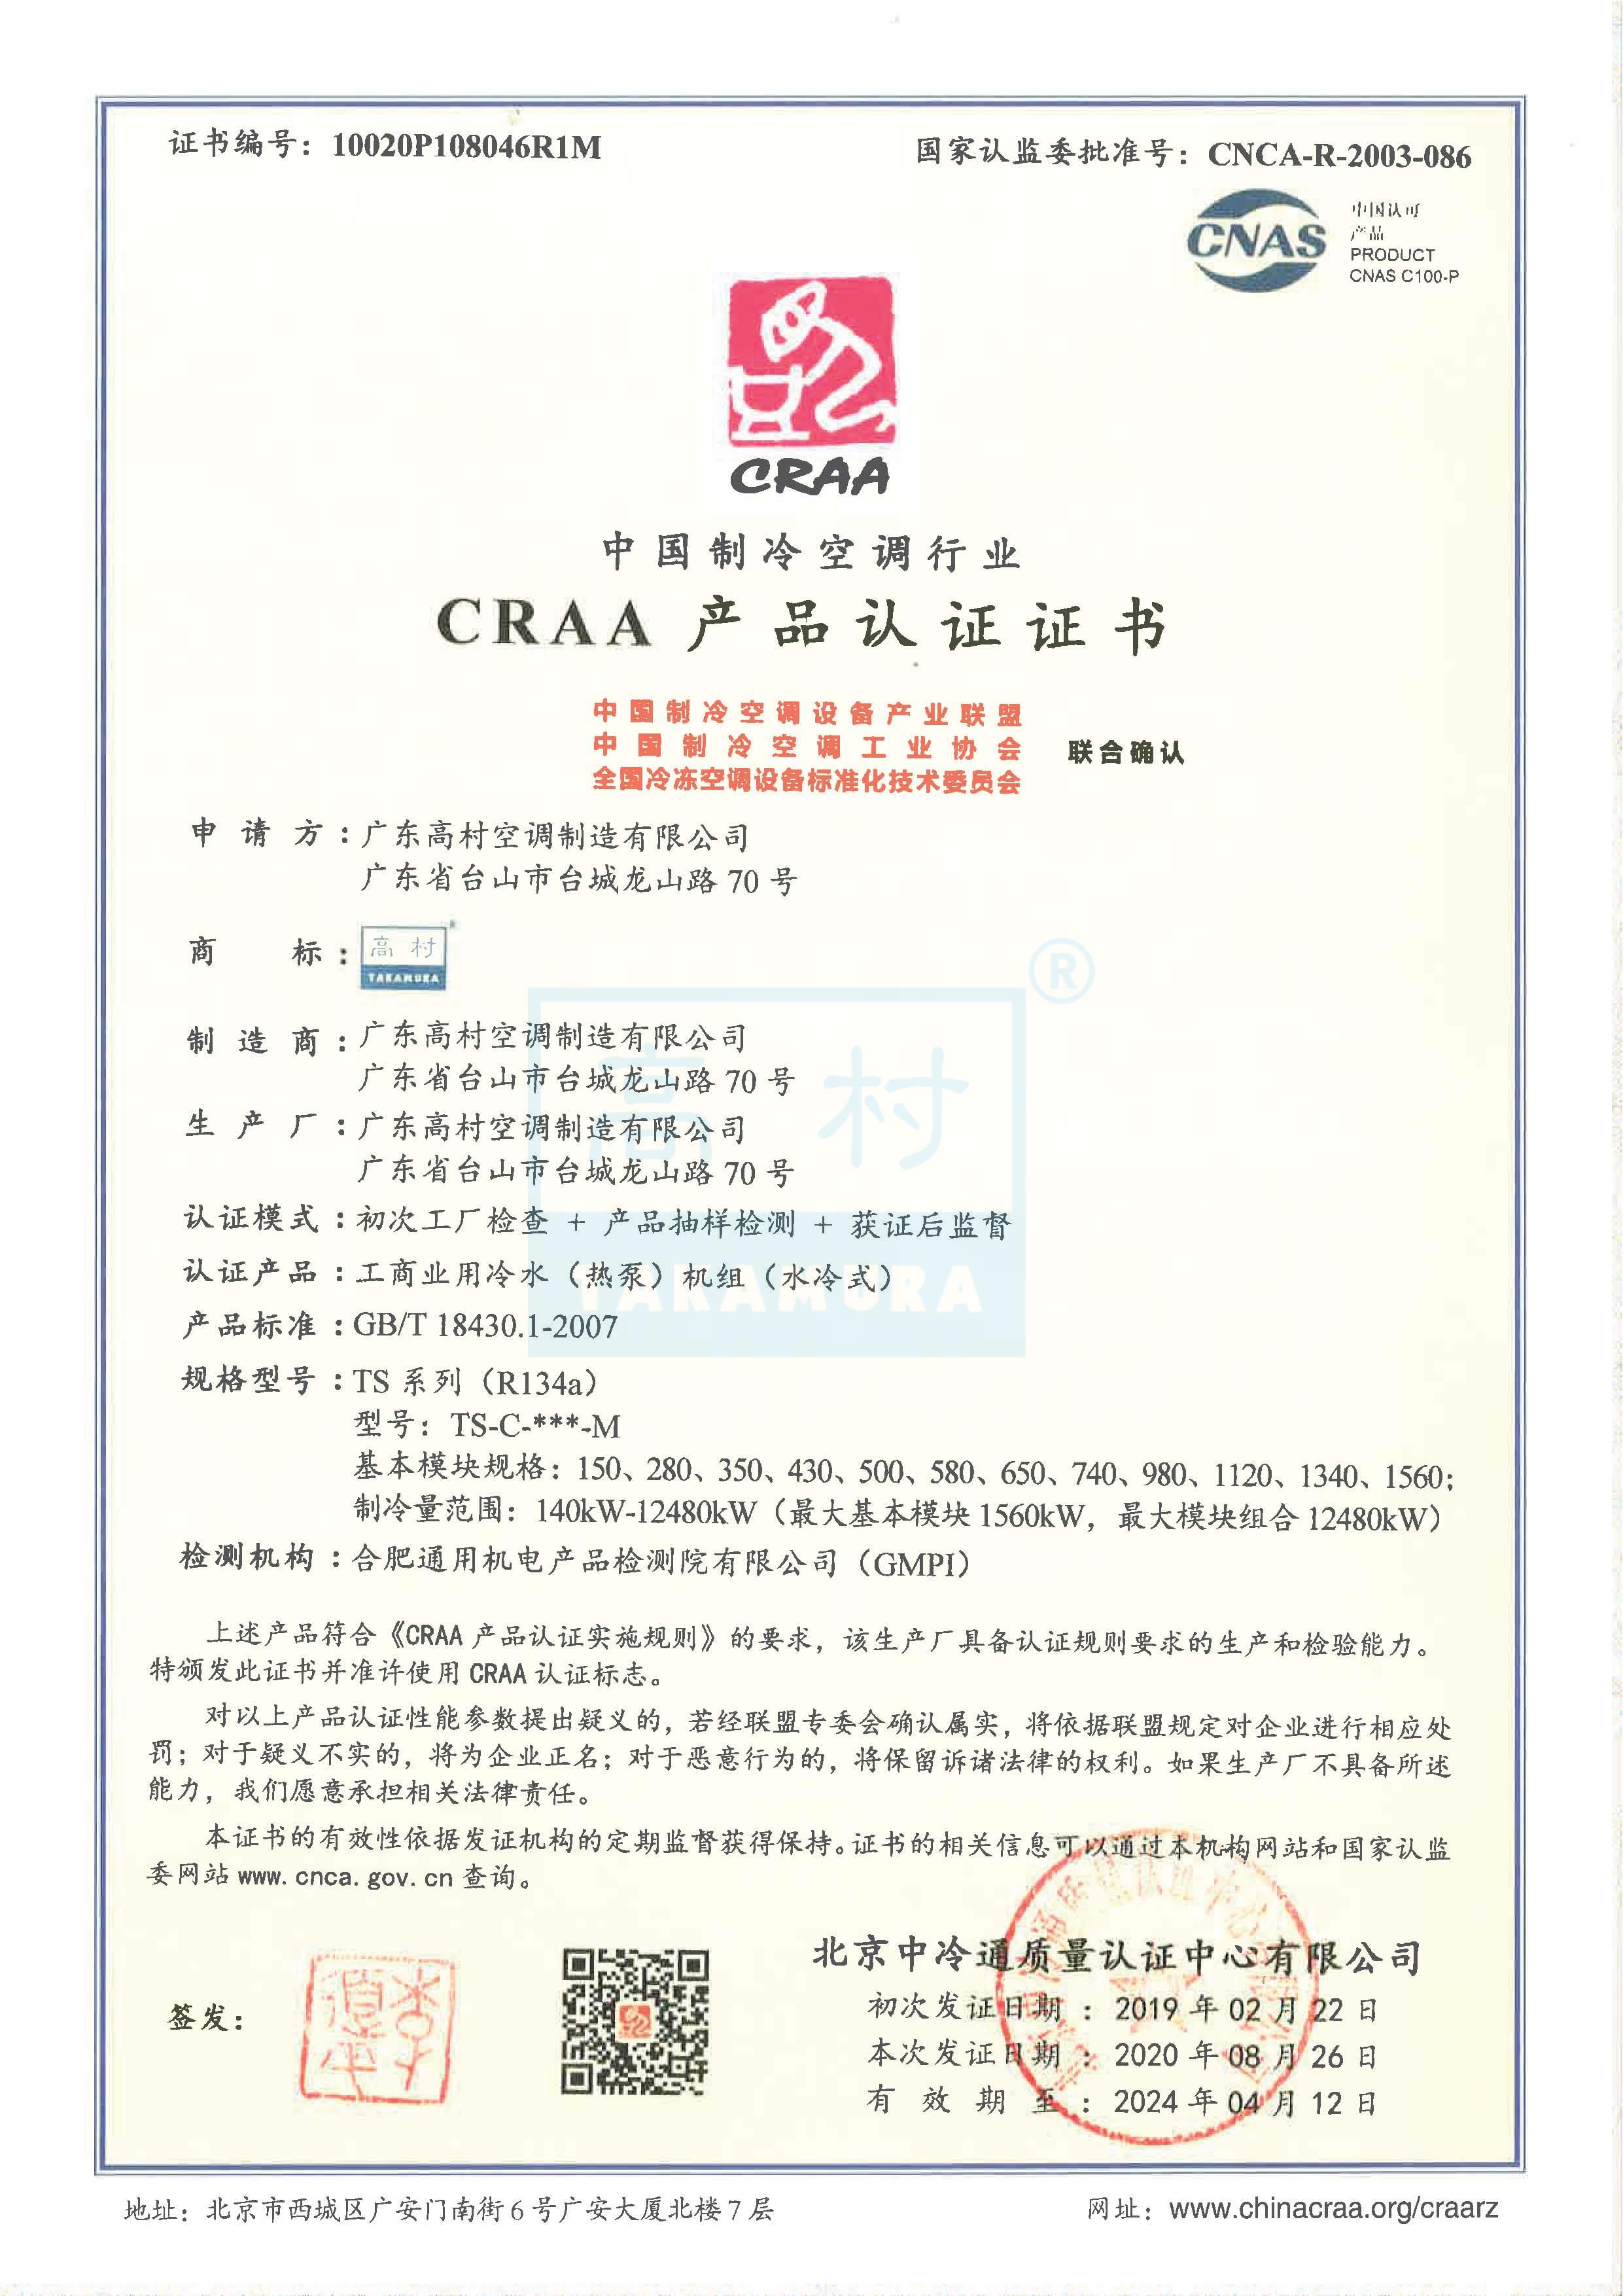 2020-2024 CRAA产品认证证书-TS-C-M系列